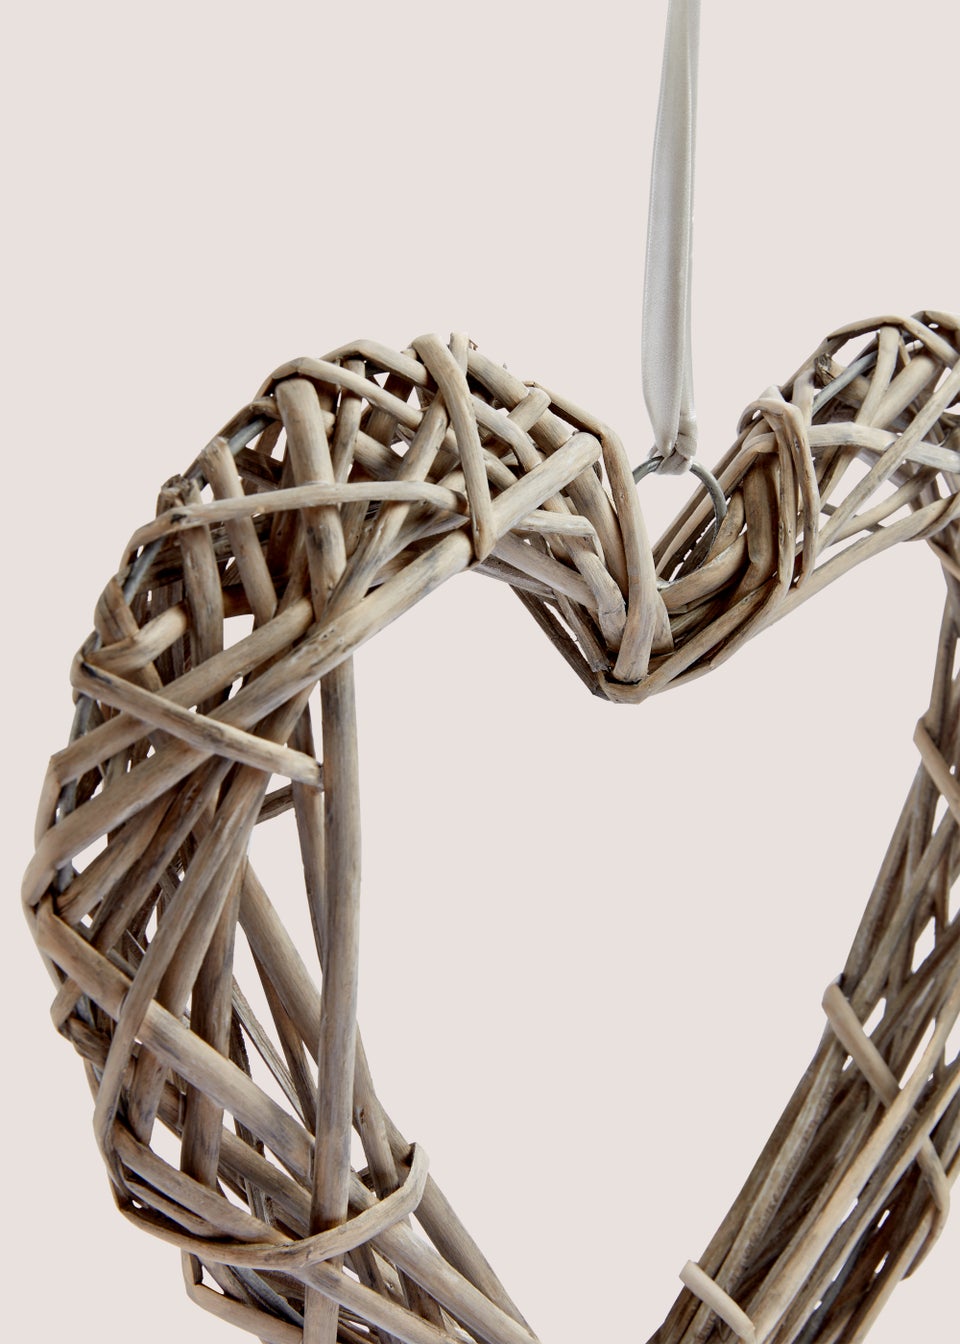 Woven Hanging Heart (35cm x 35cm)